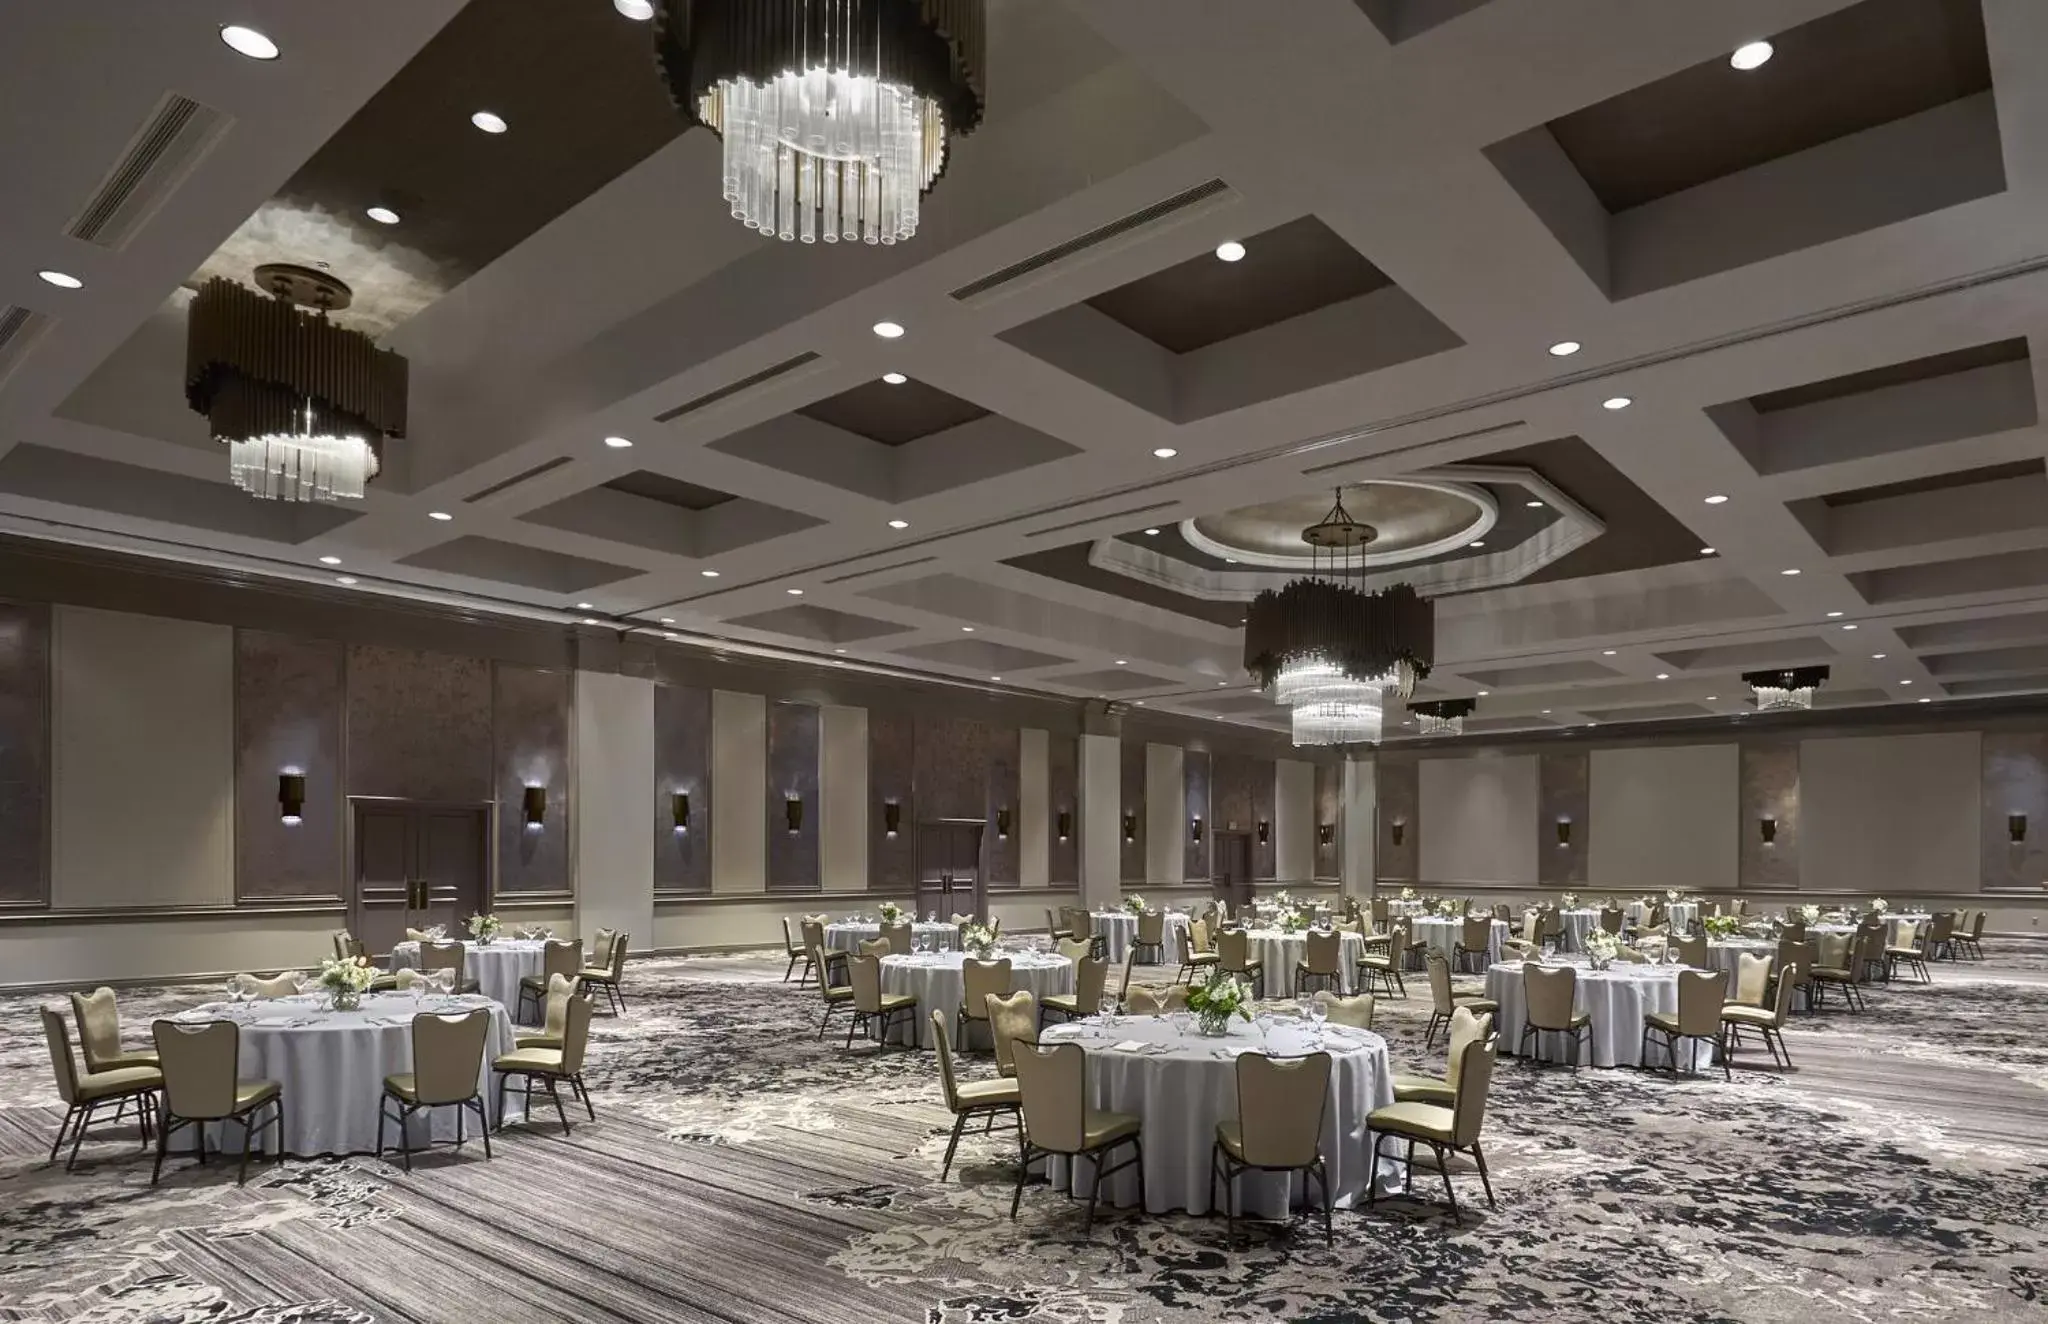 Banquet/Function facilities, Restaurant/Places to Eat in Loews Vanderbilt Hotel